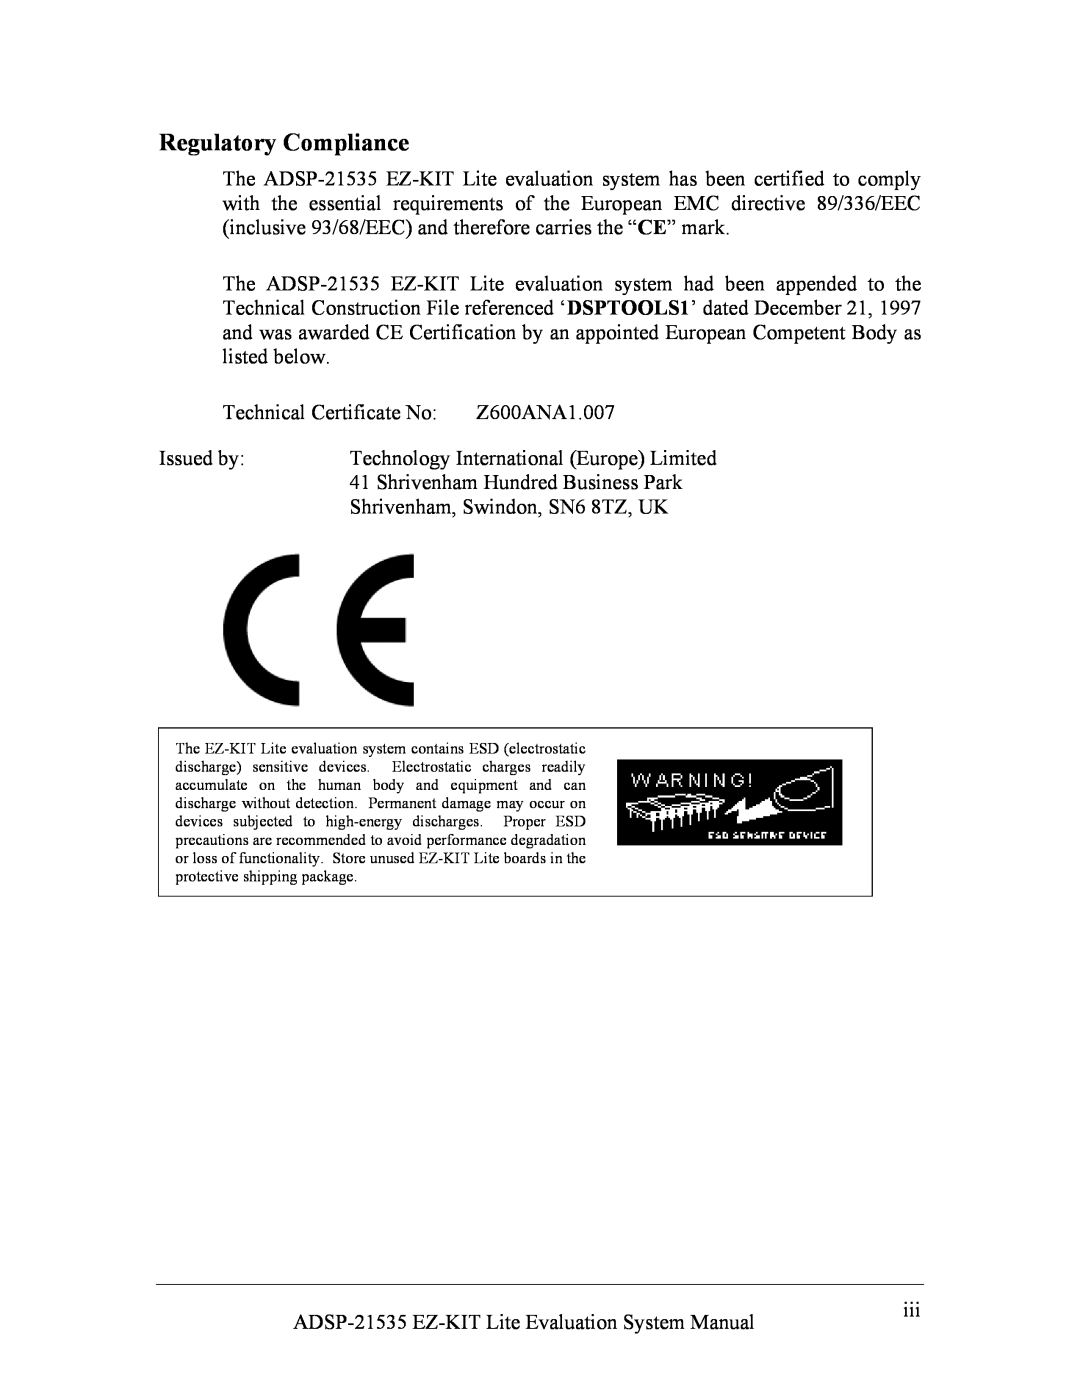 Analog Devices ADSP-21535 E-KIT LITE, 82-0000603-01 system manual Regulatory Compliance 